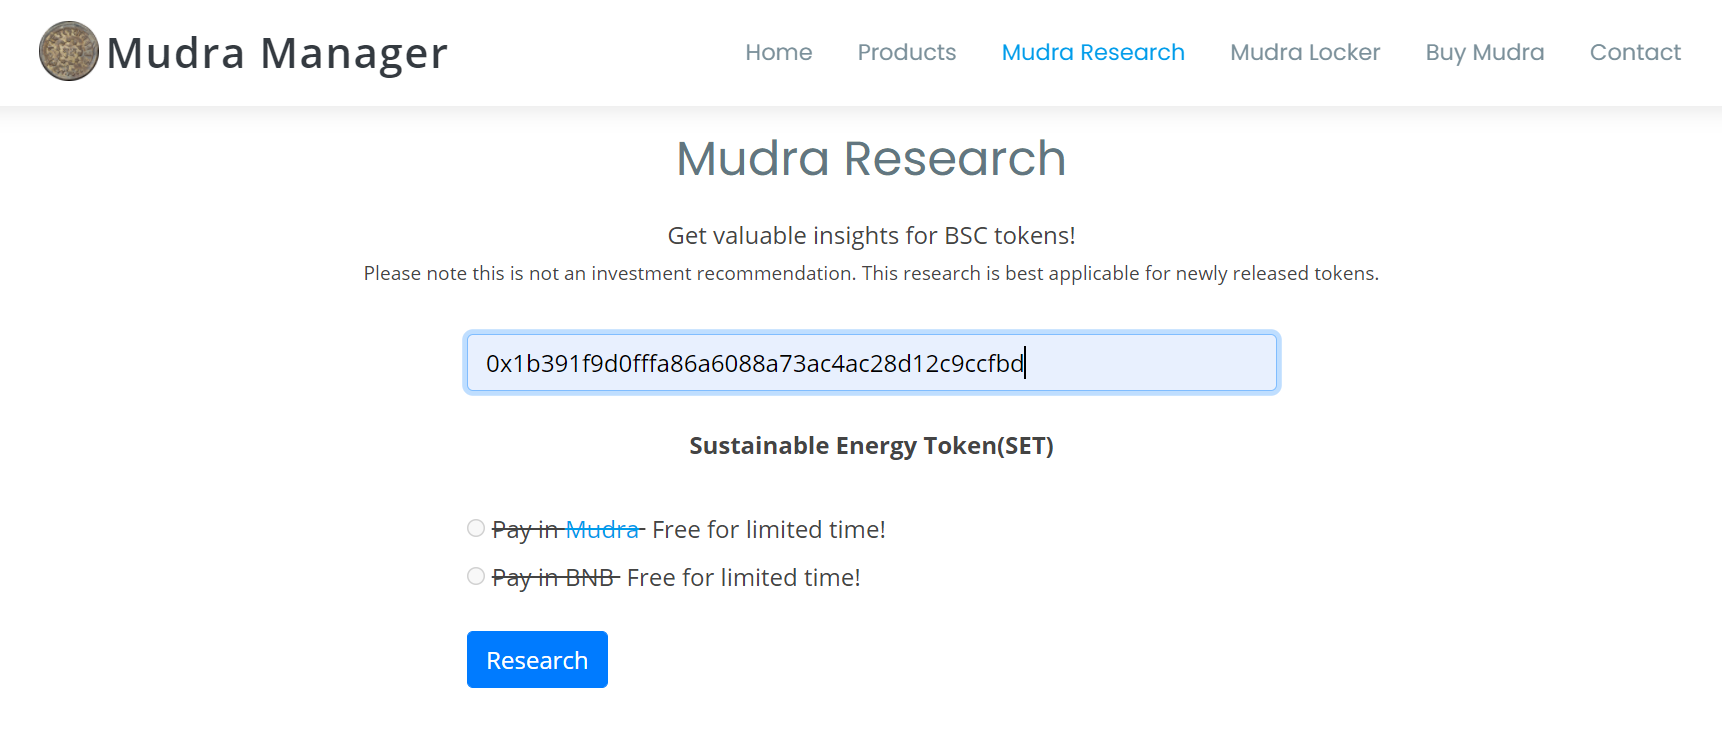 Search in Mudra Research